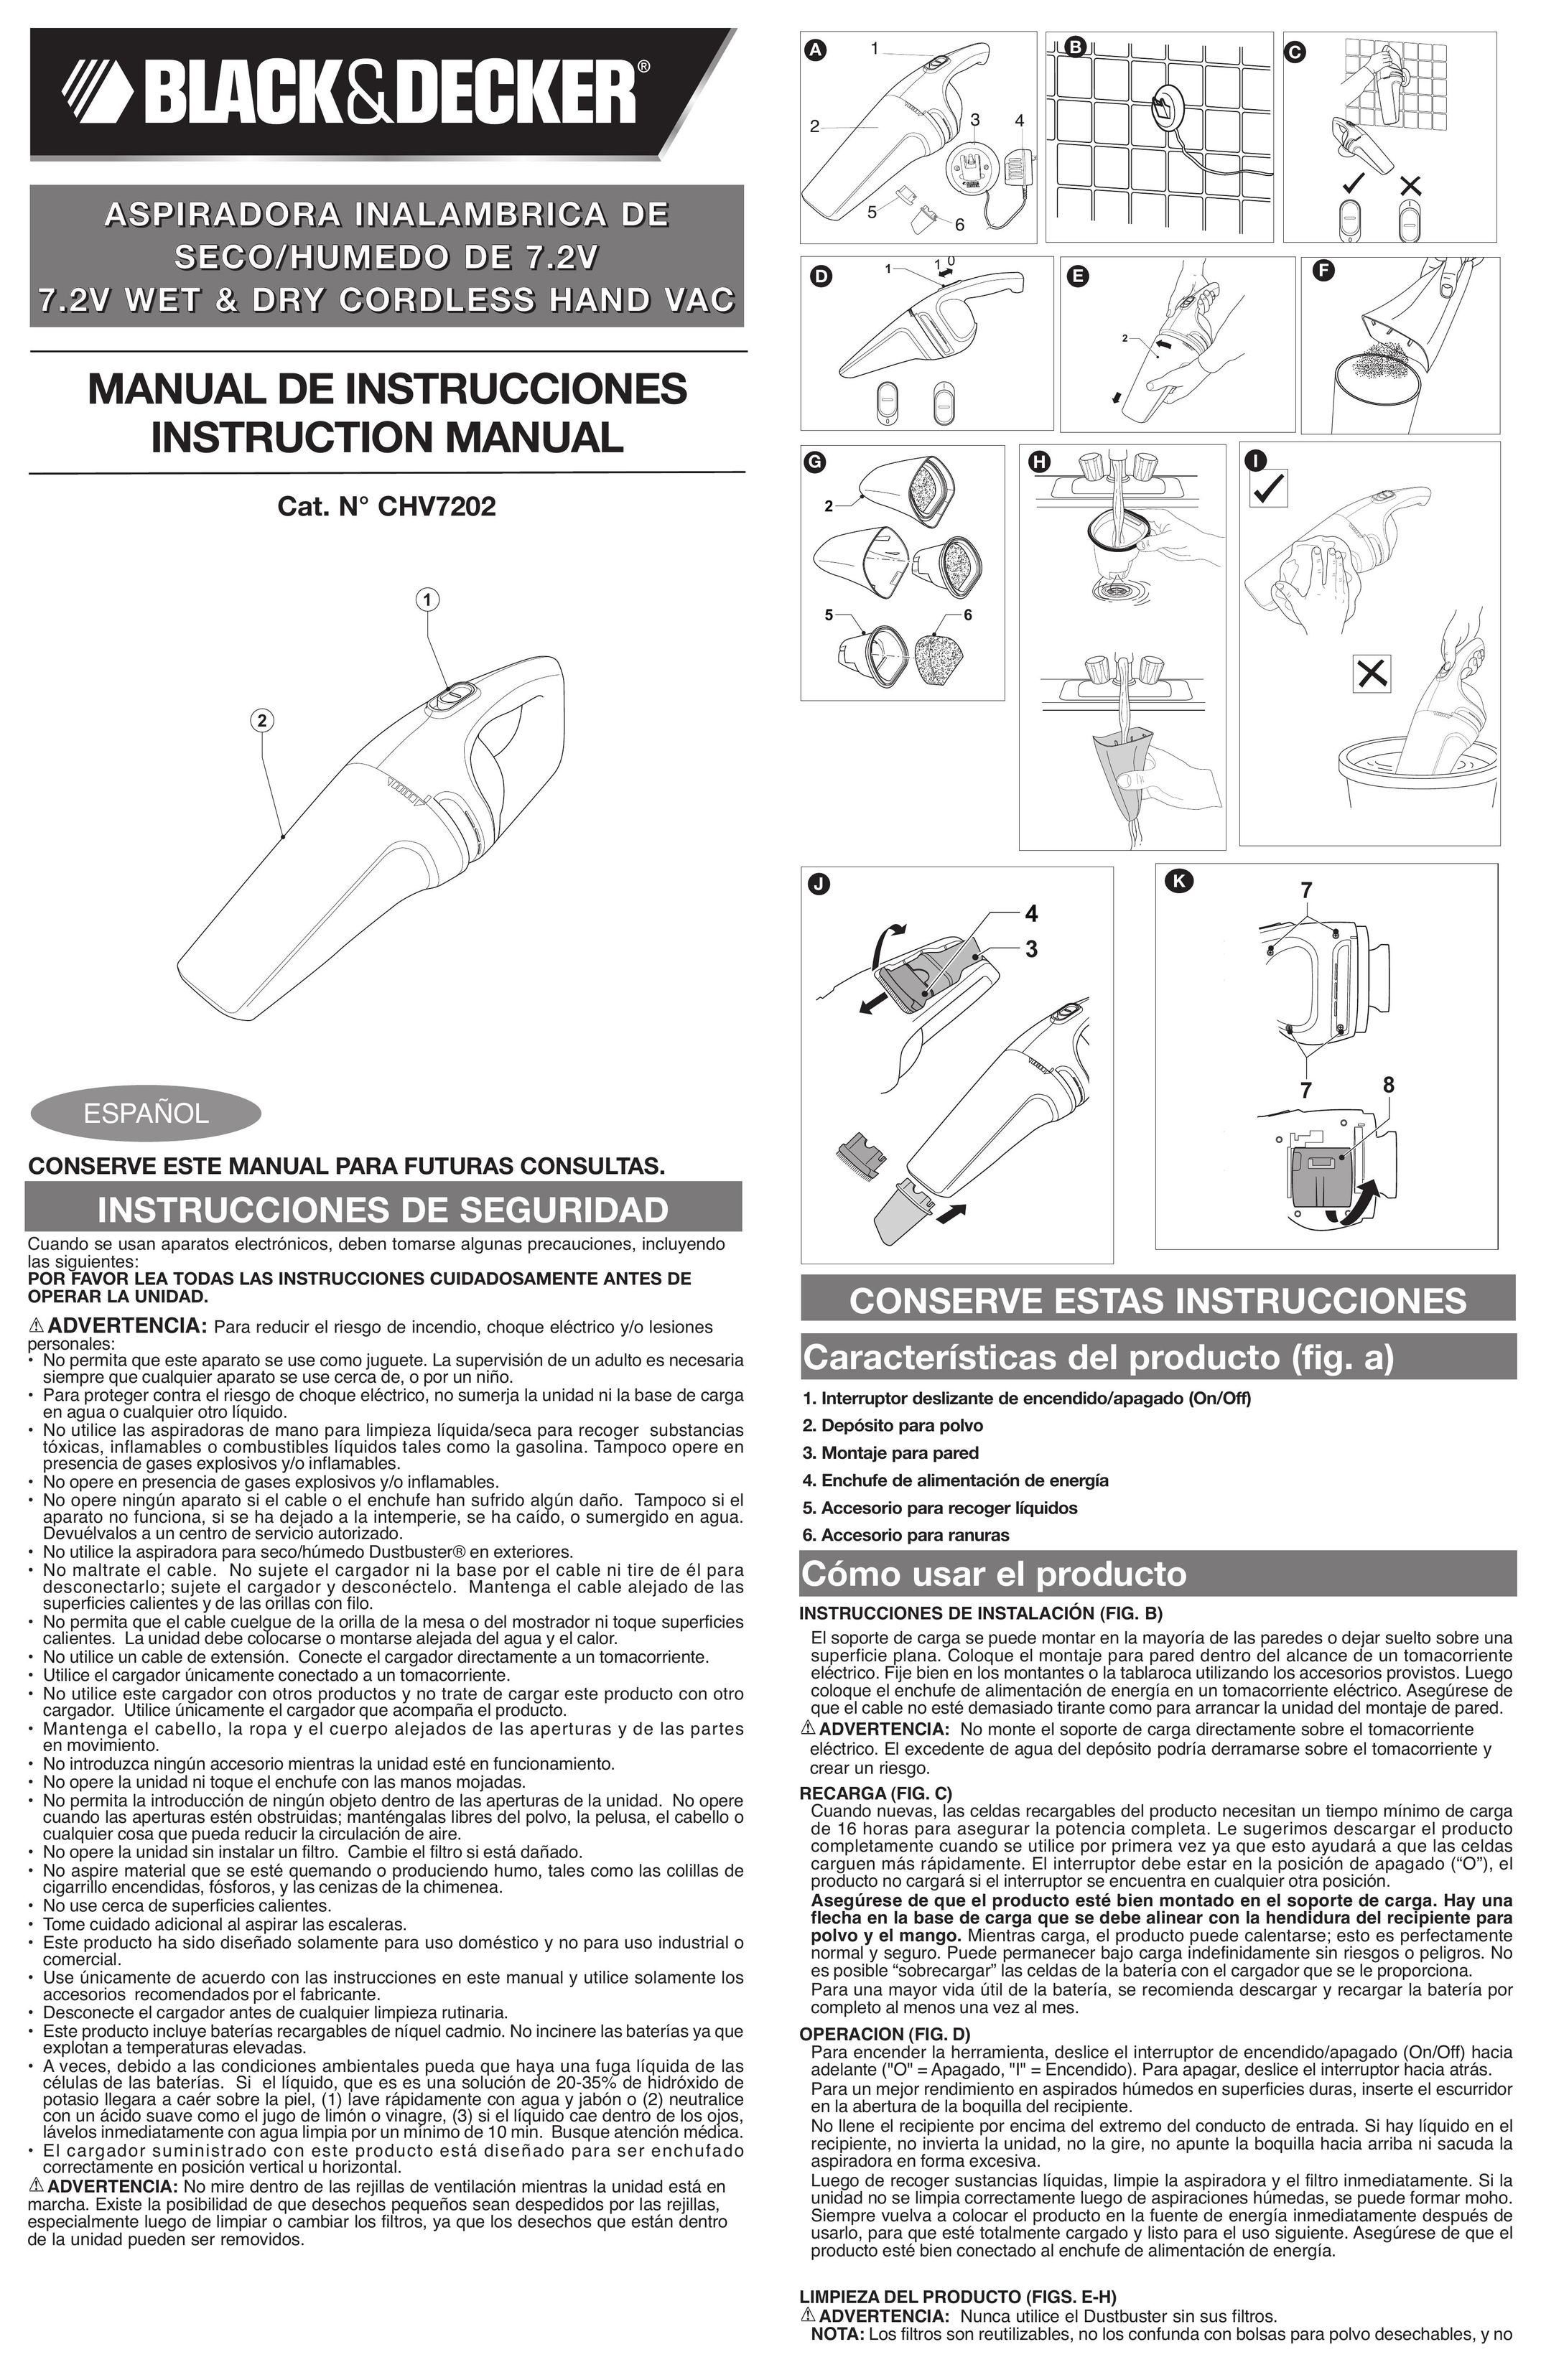 Black & Decker 90529151 Vacuum Cleaner User Manual